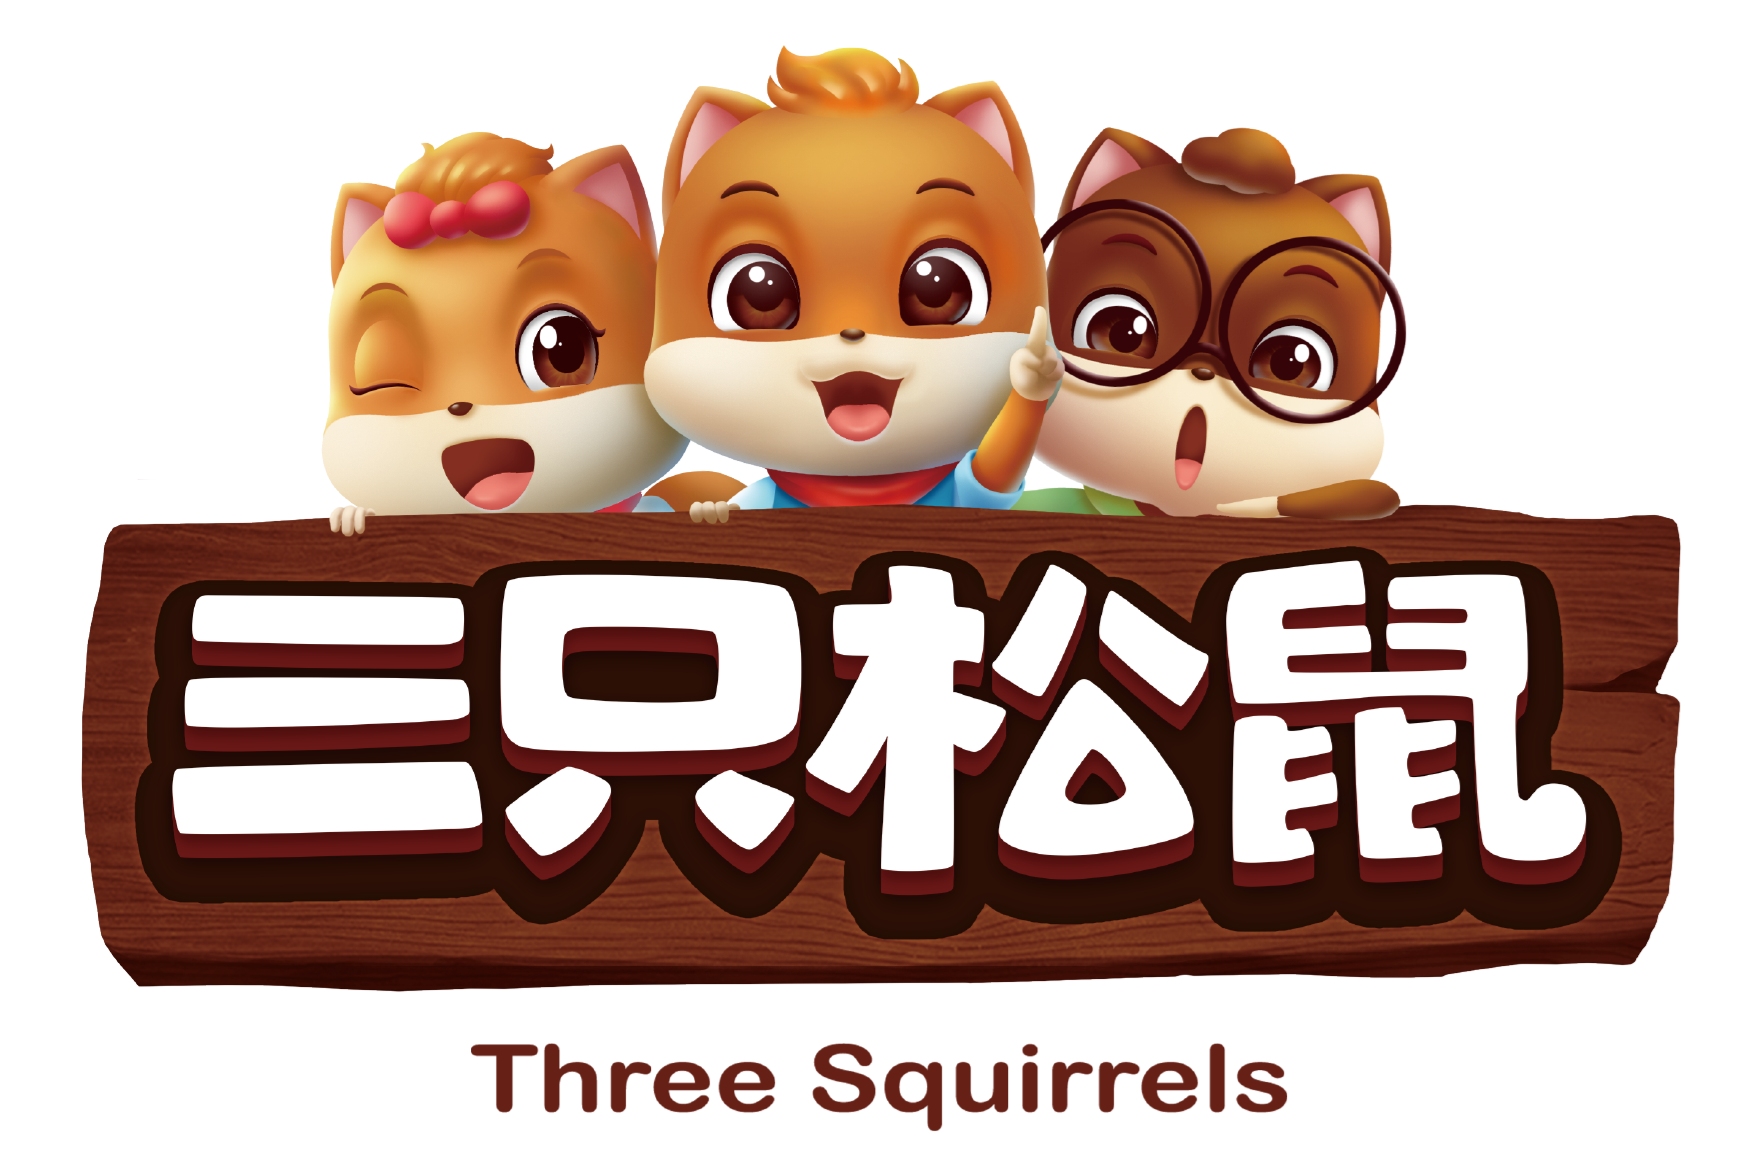 Three Squirrels